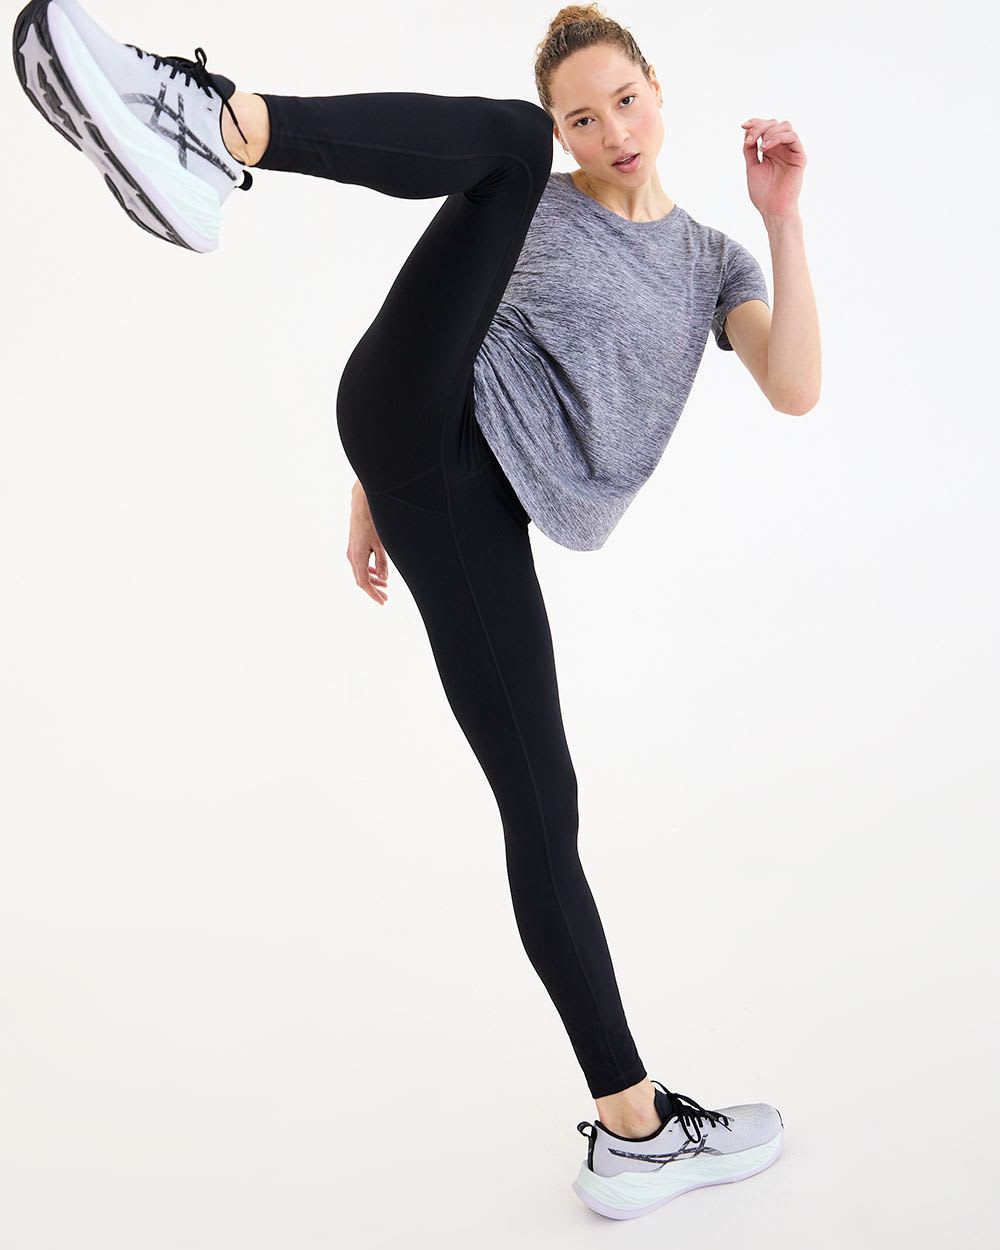 High Waist Offline Yoga Pants With Pockets For Women Elastic Gym